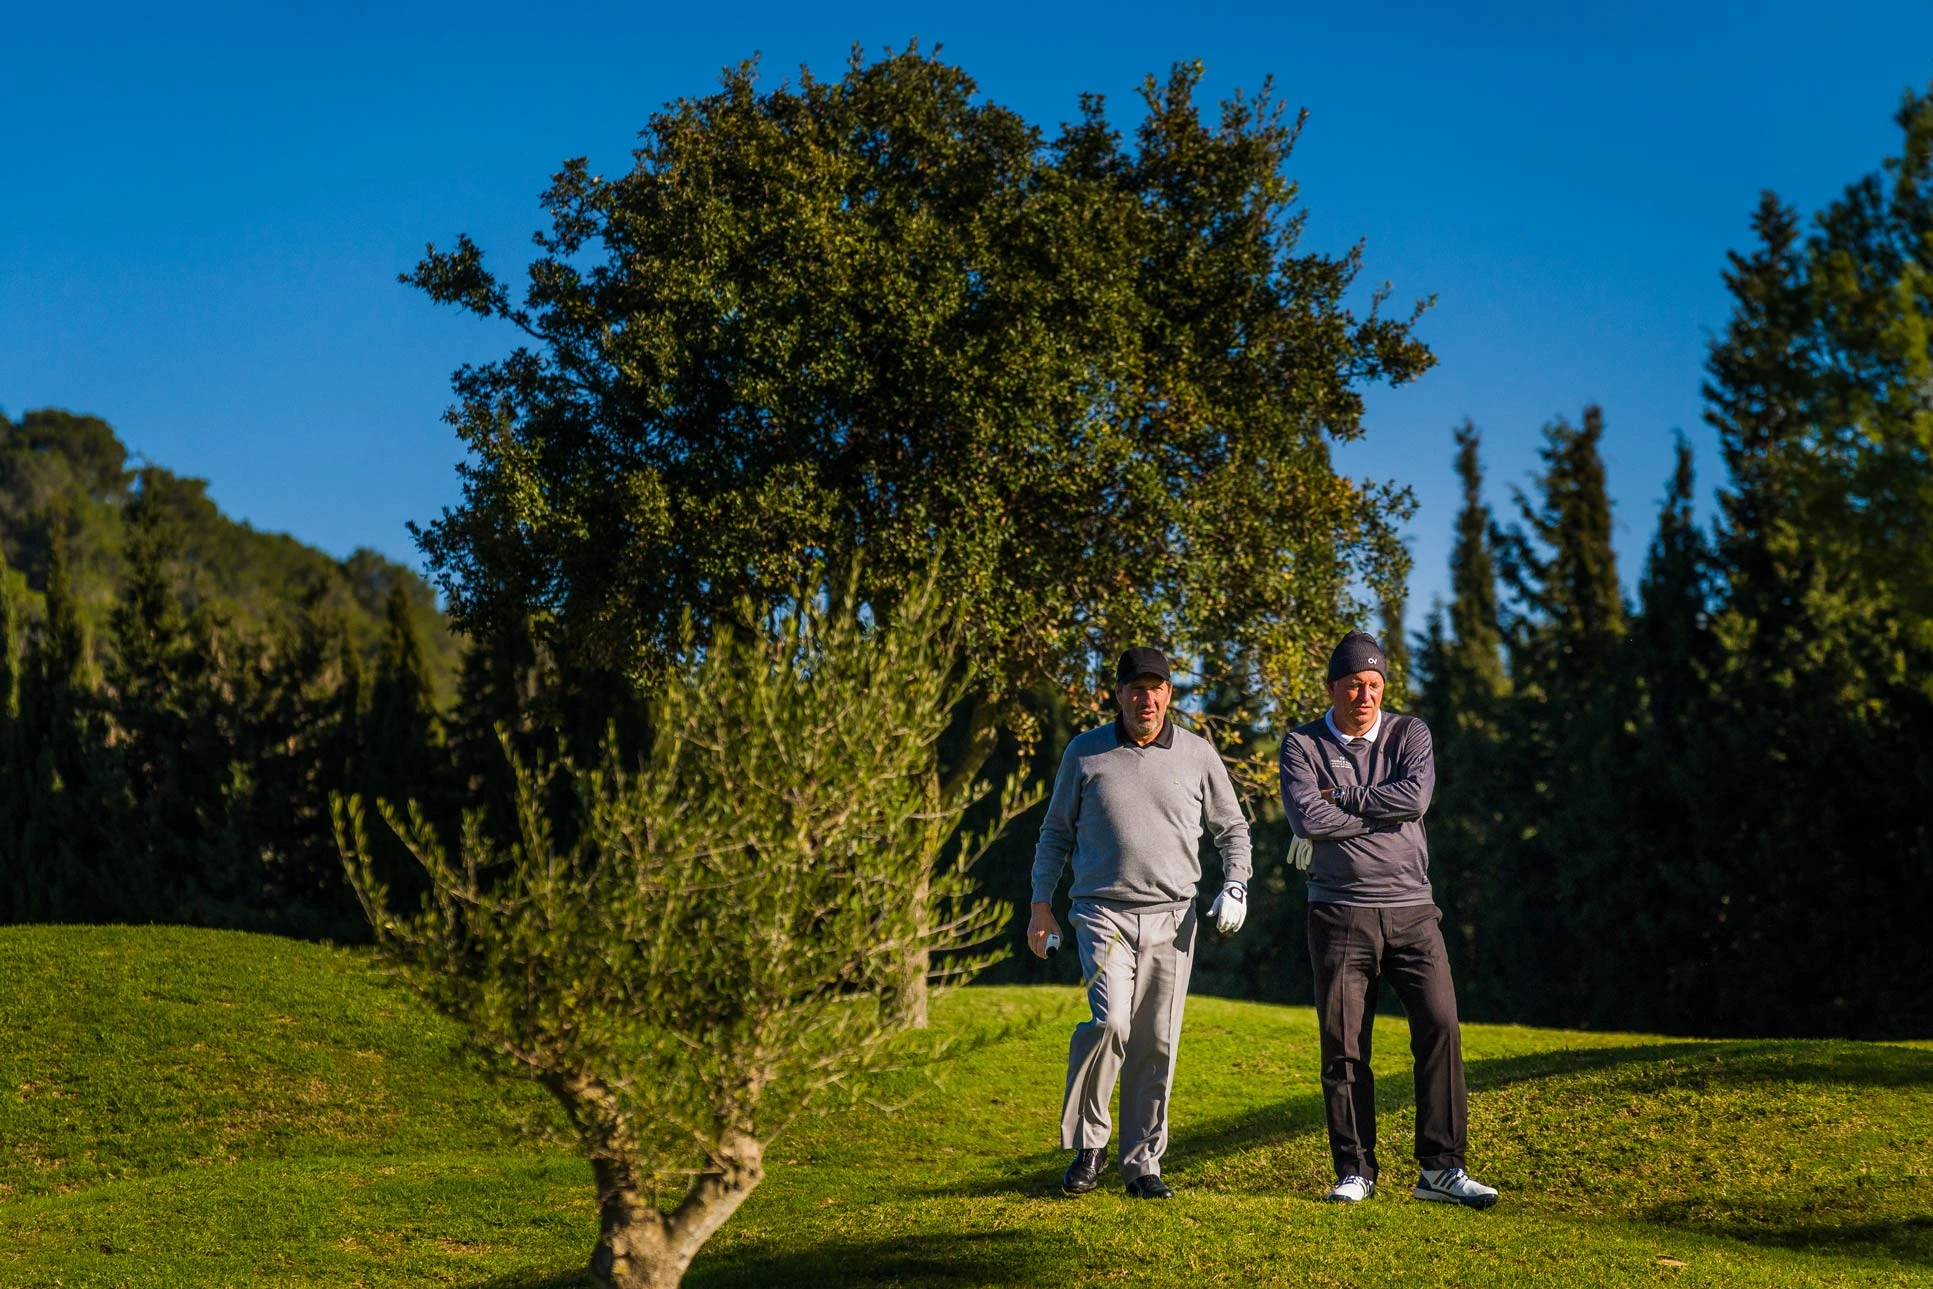 Balearhouse und das VI Golf-Charity-Turnier von Olazábal & Nadal am Pula Golf Resort 